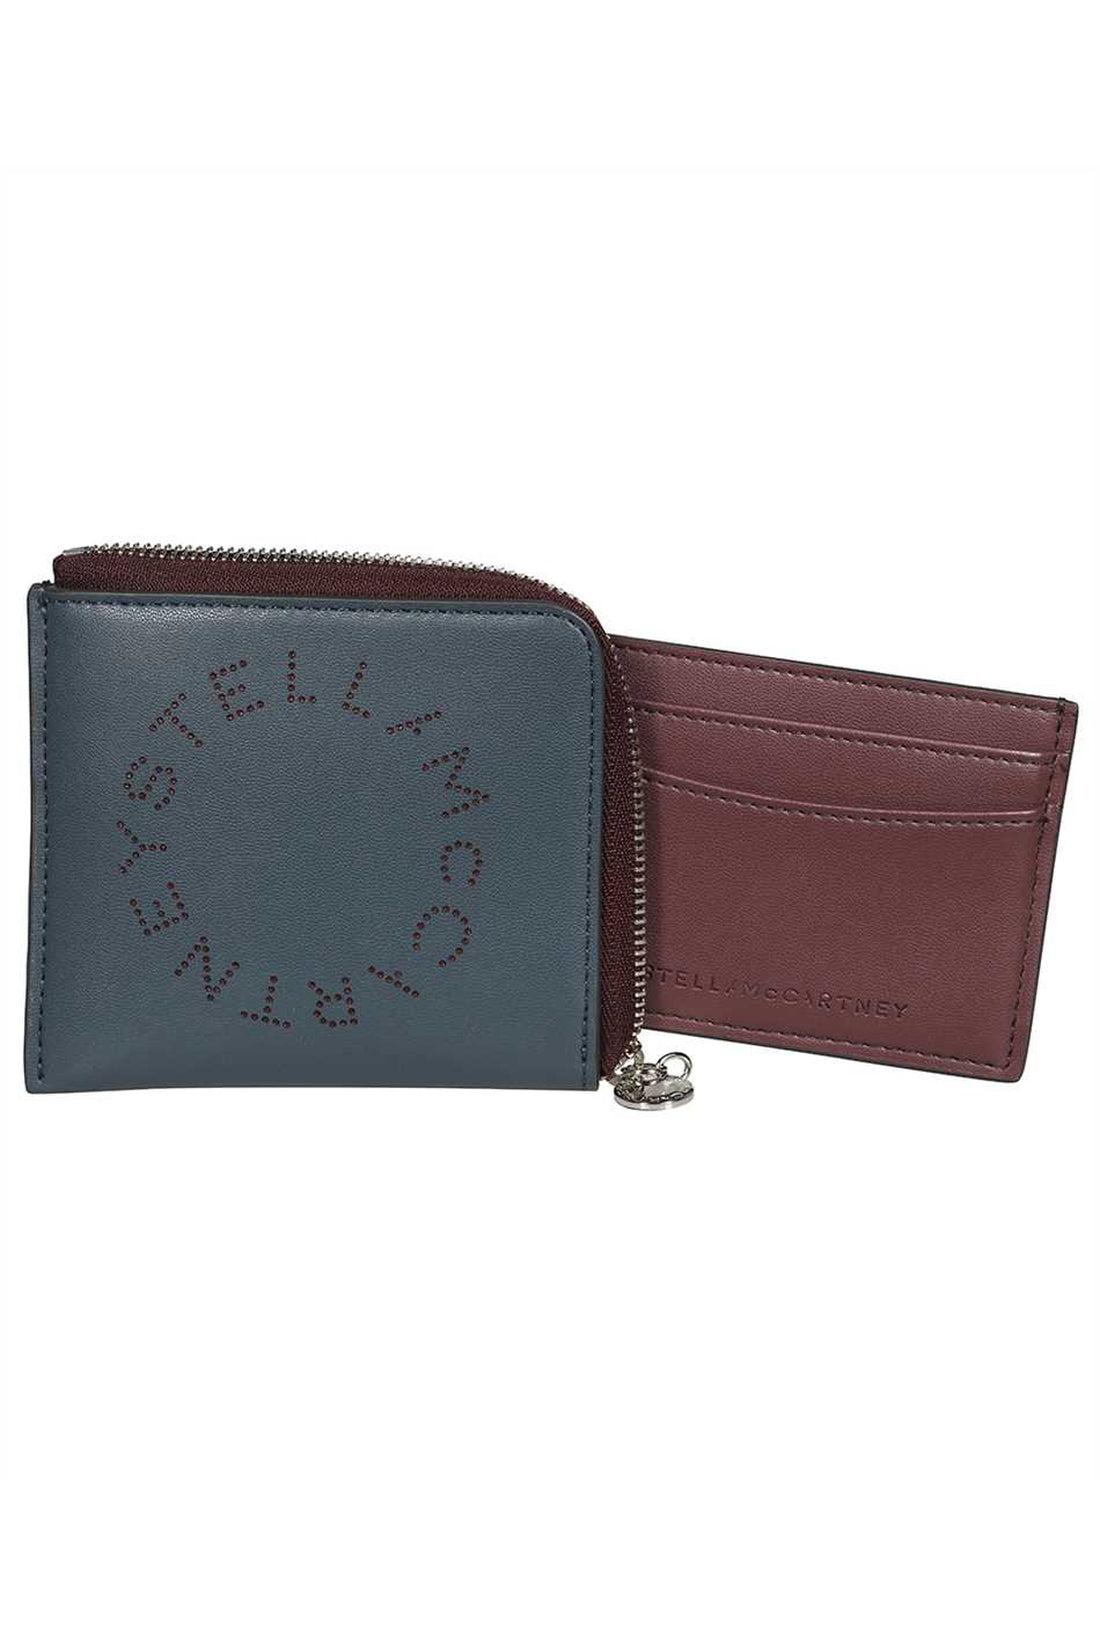 Stella McCartney-OUTLET-SALE-Stella Logo small wallet-ARCHIVIST